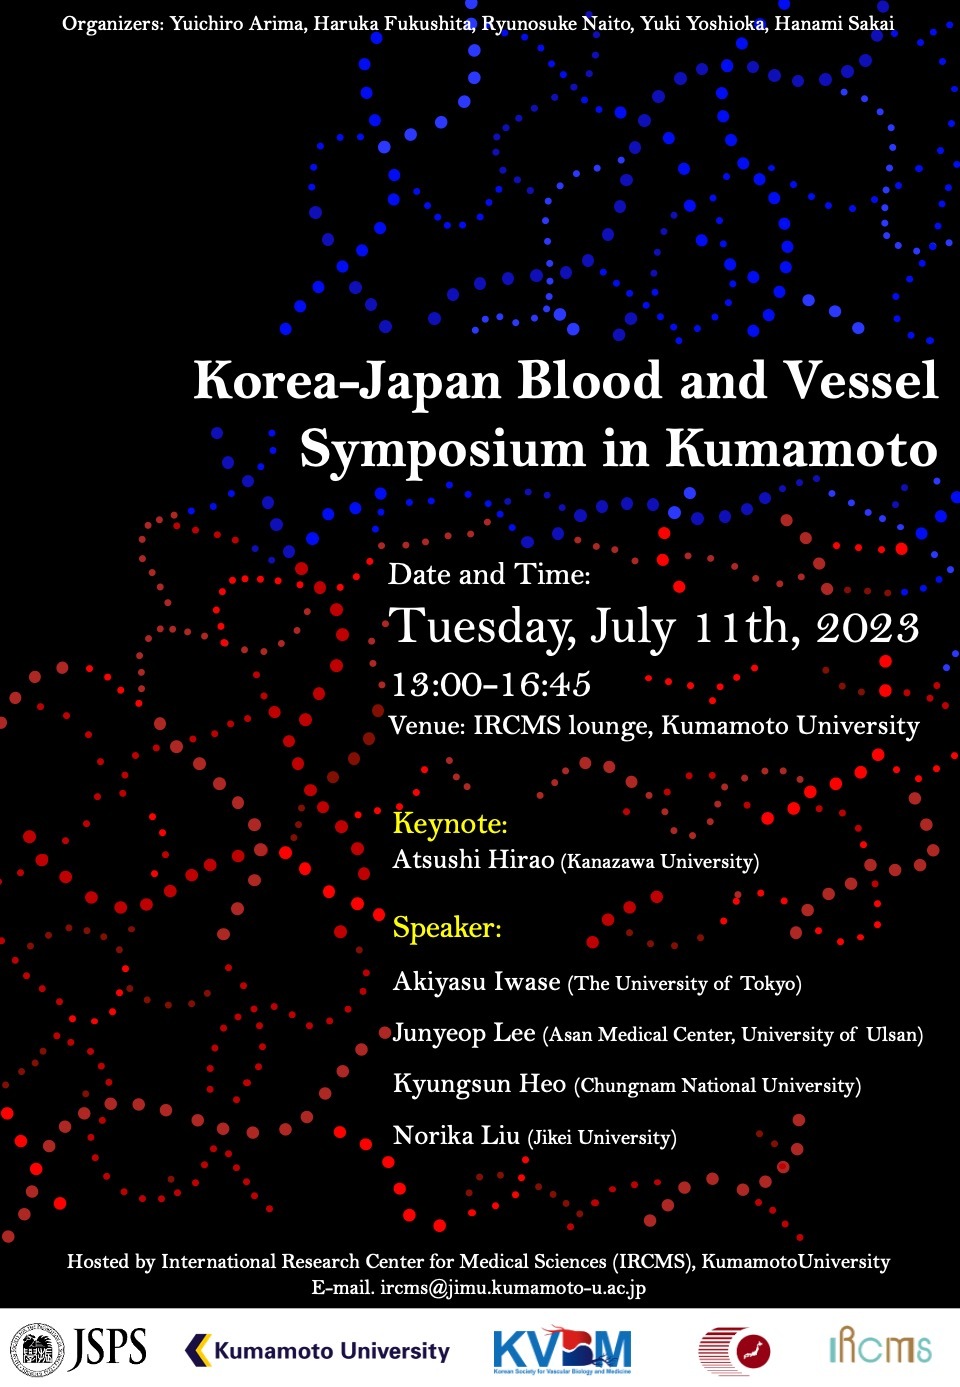 https://ircms.kumamoto-u.ac.jp/news/images/Blood%20vessel%20symposium_flyer.jpg